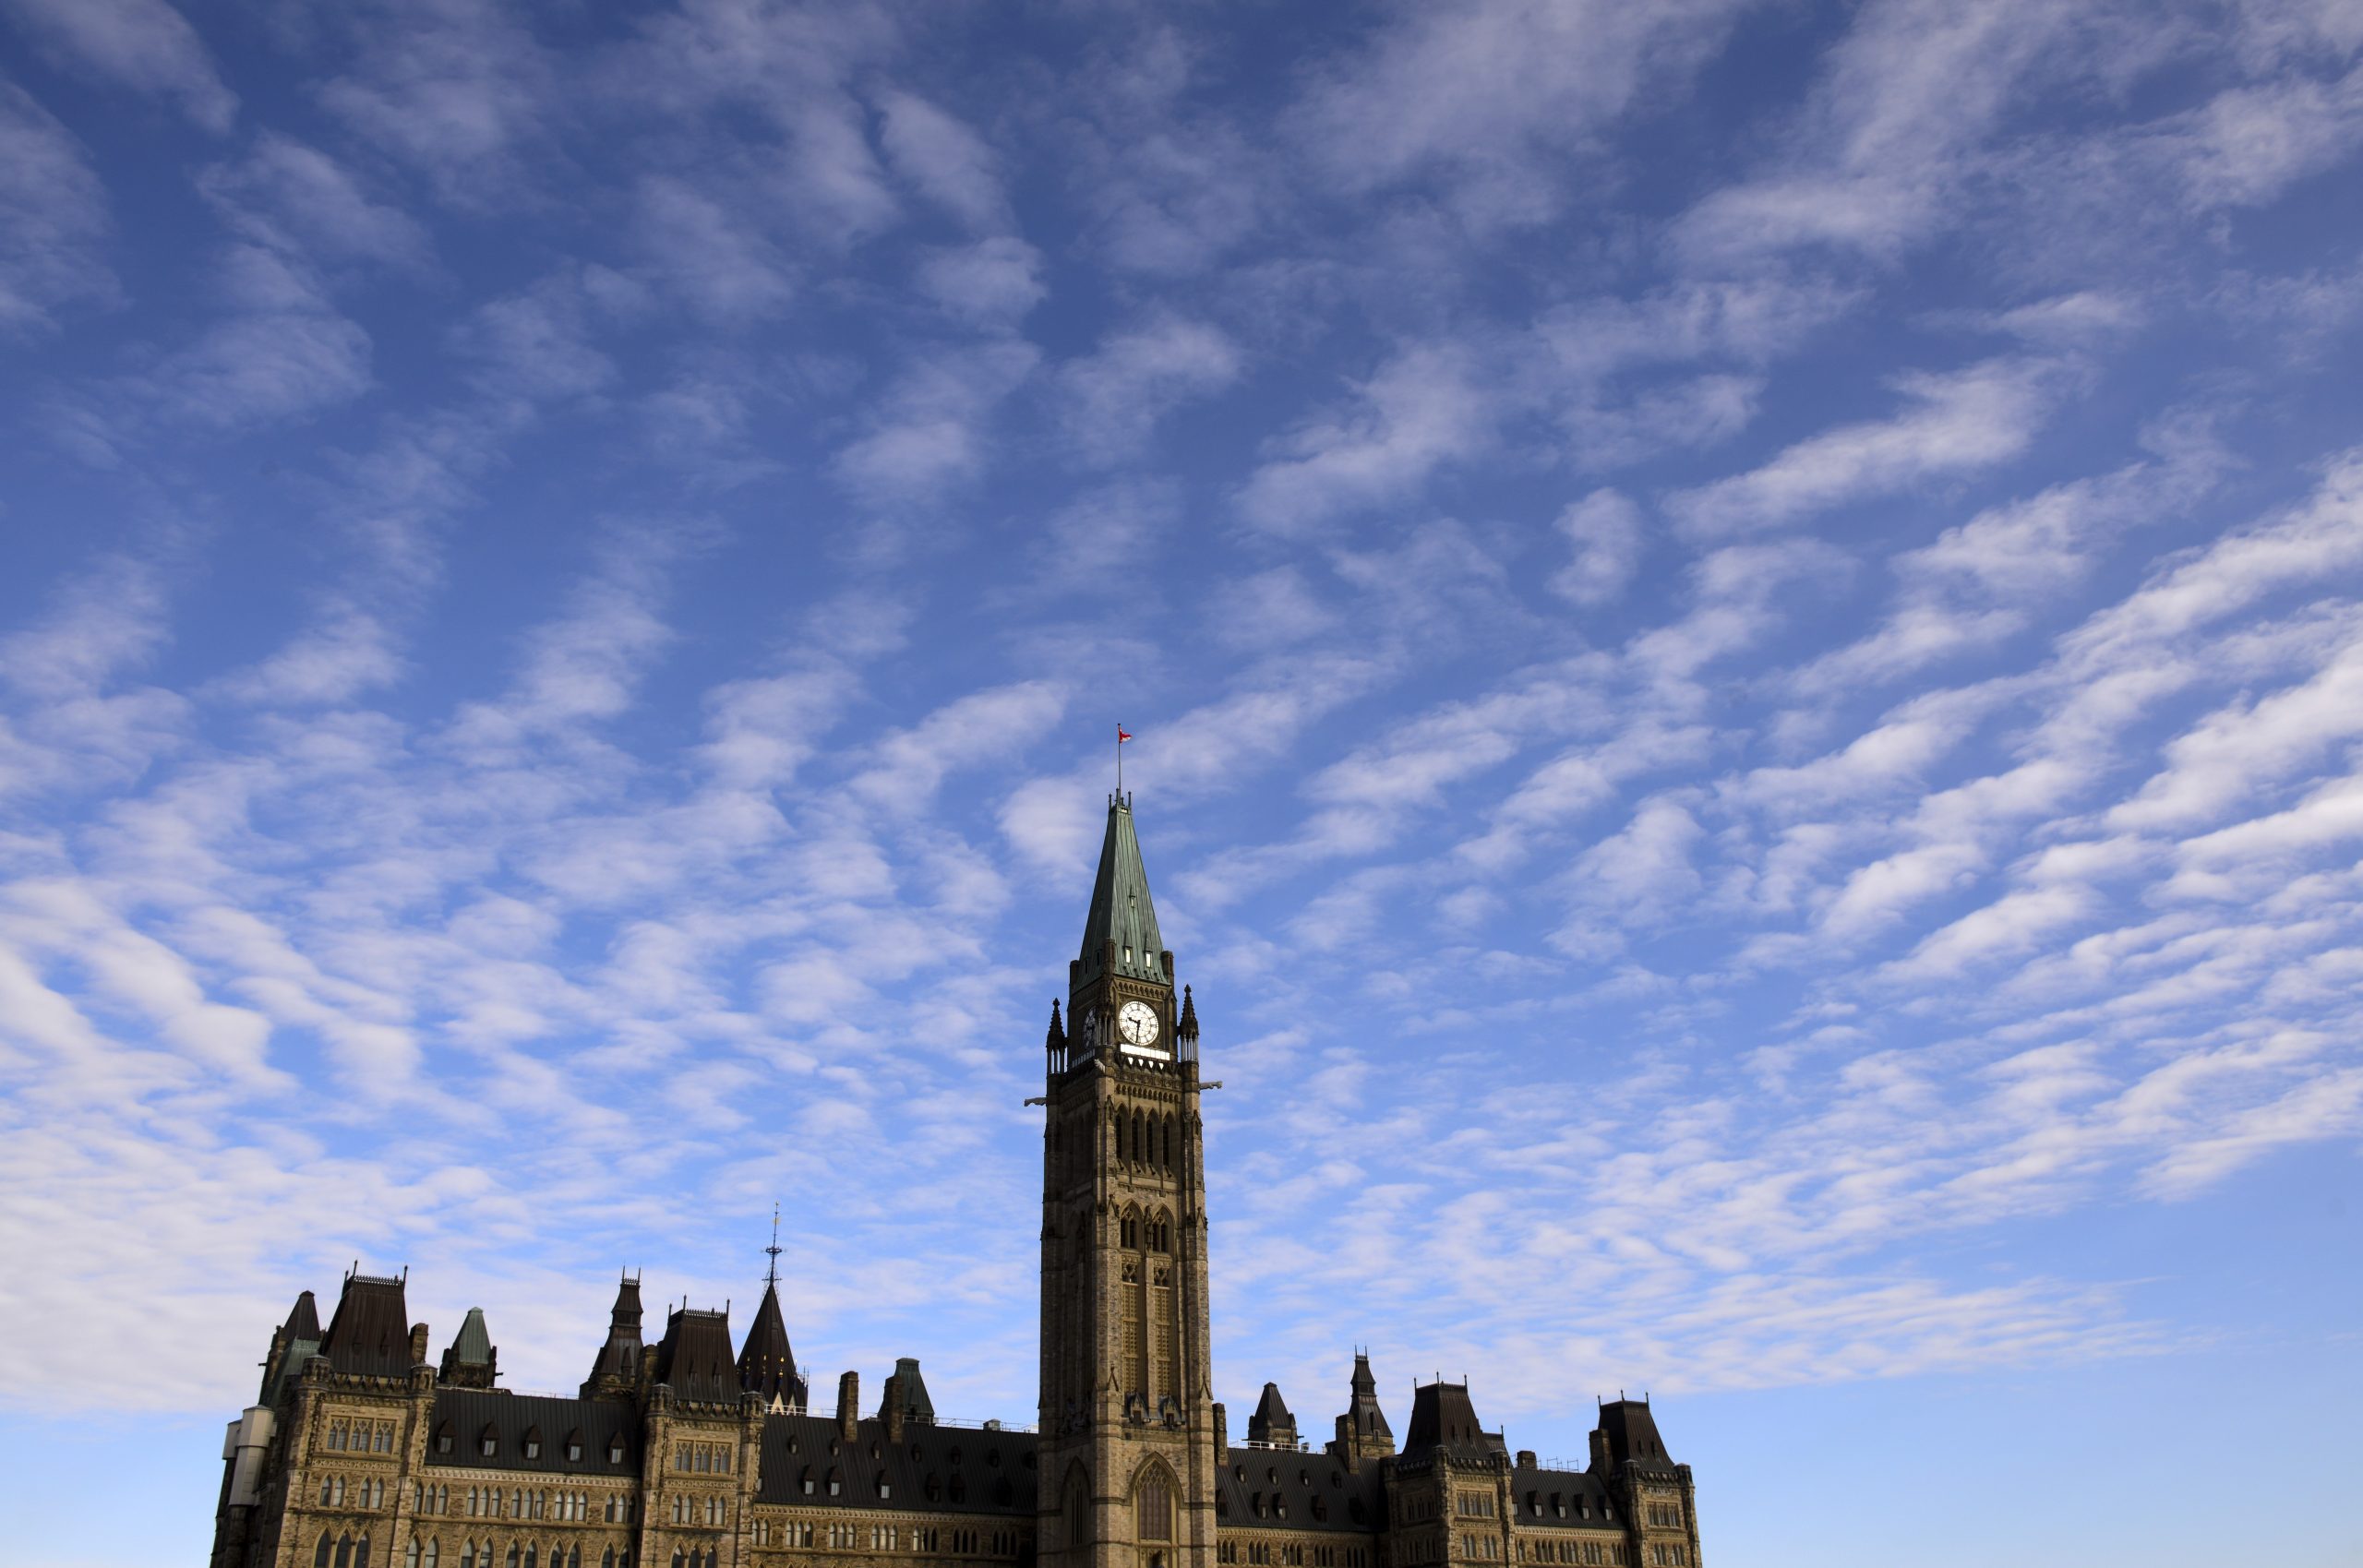 Parliament Hill building in Ottawa